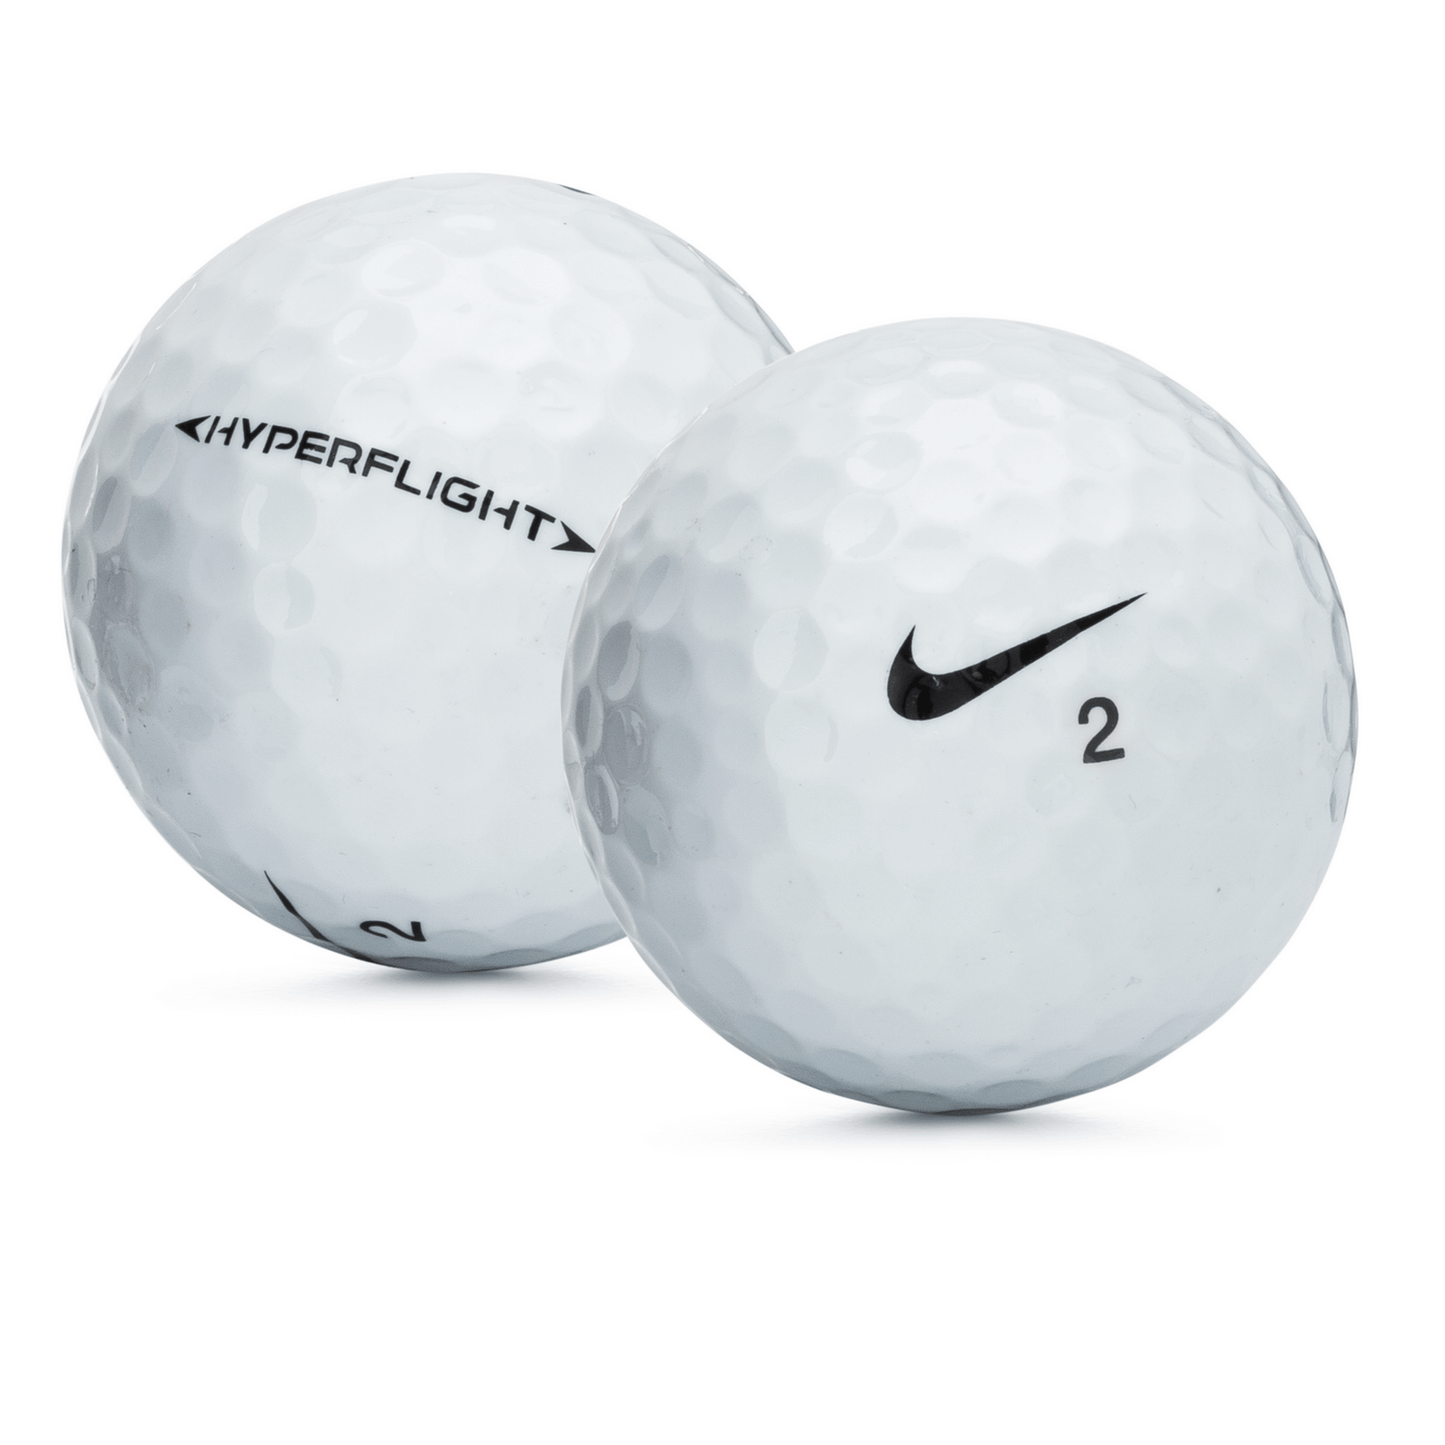 Used Nike Hyperflight Golf Balls - 1 Dozen